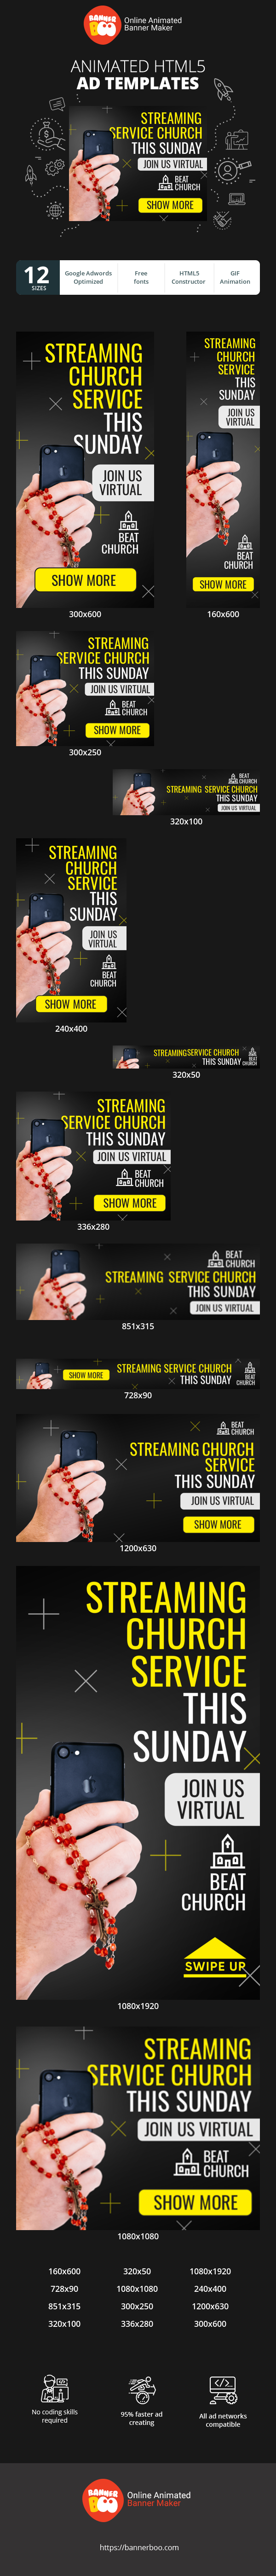 Szablon reklamy banerowej — Streaming Church Service This Sunday — Join Us Virtual